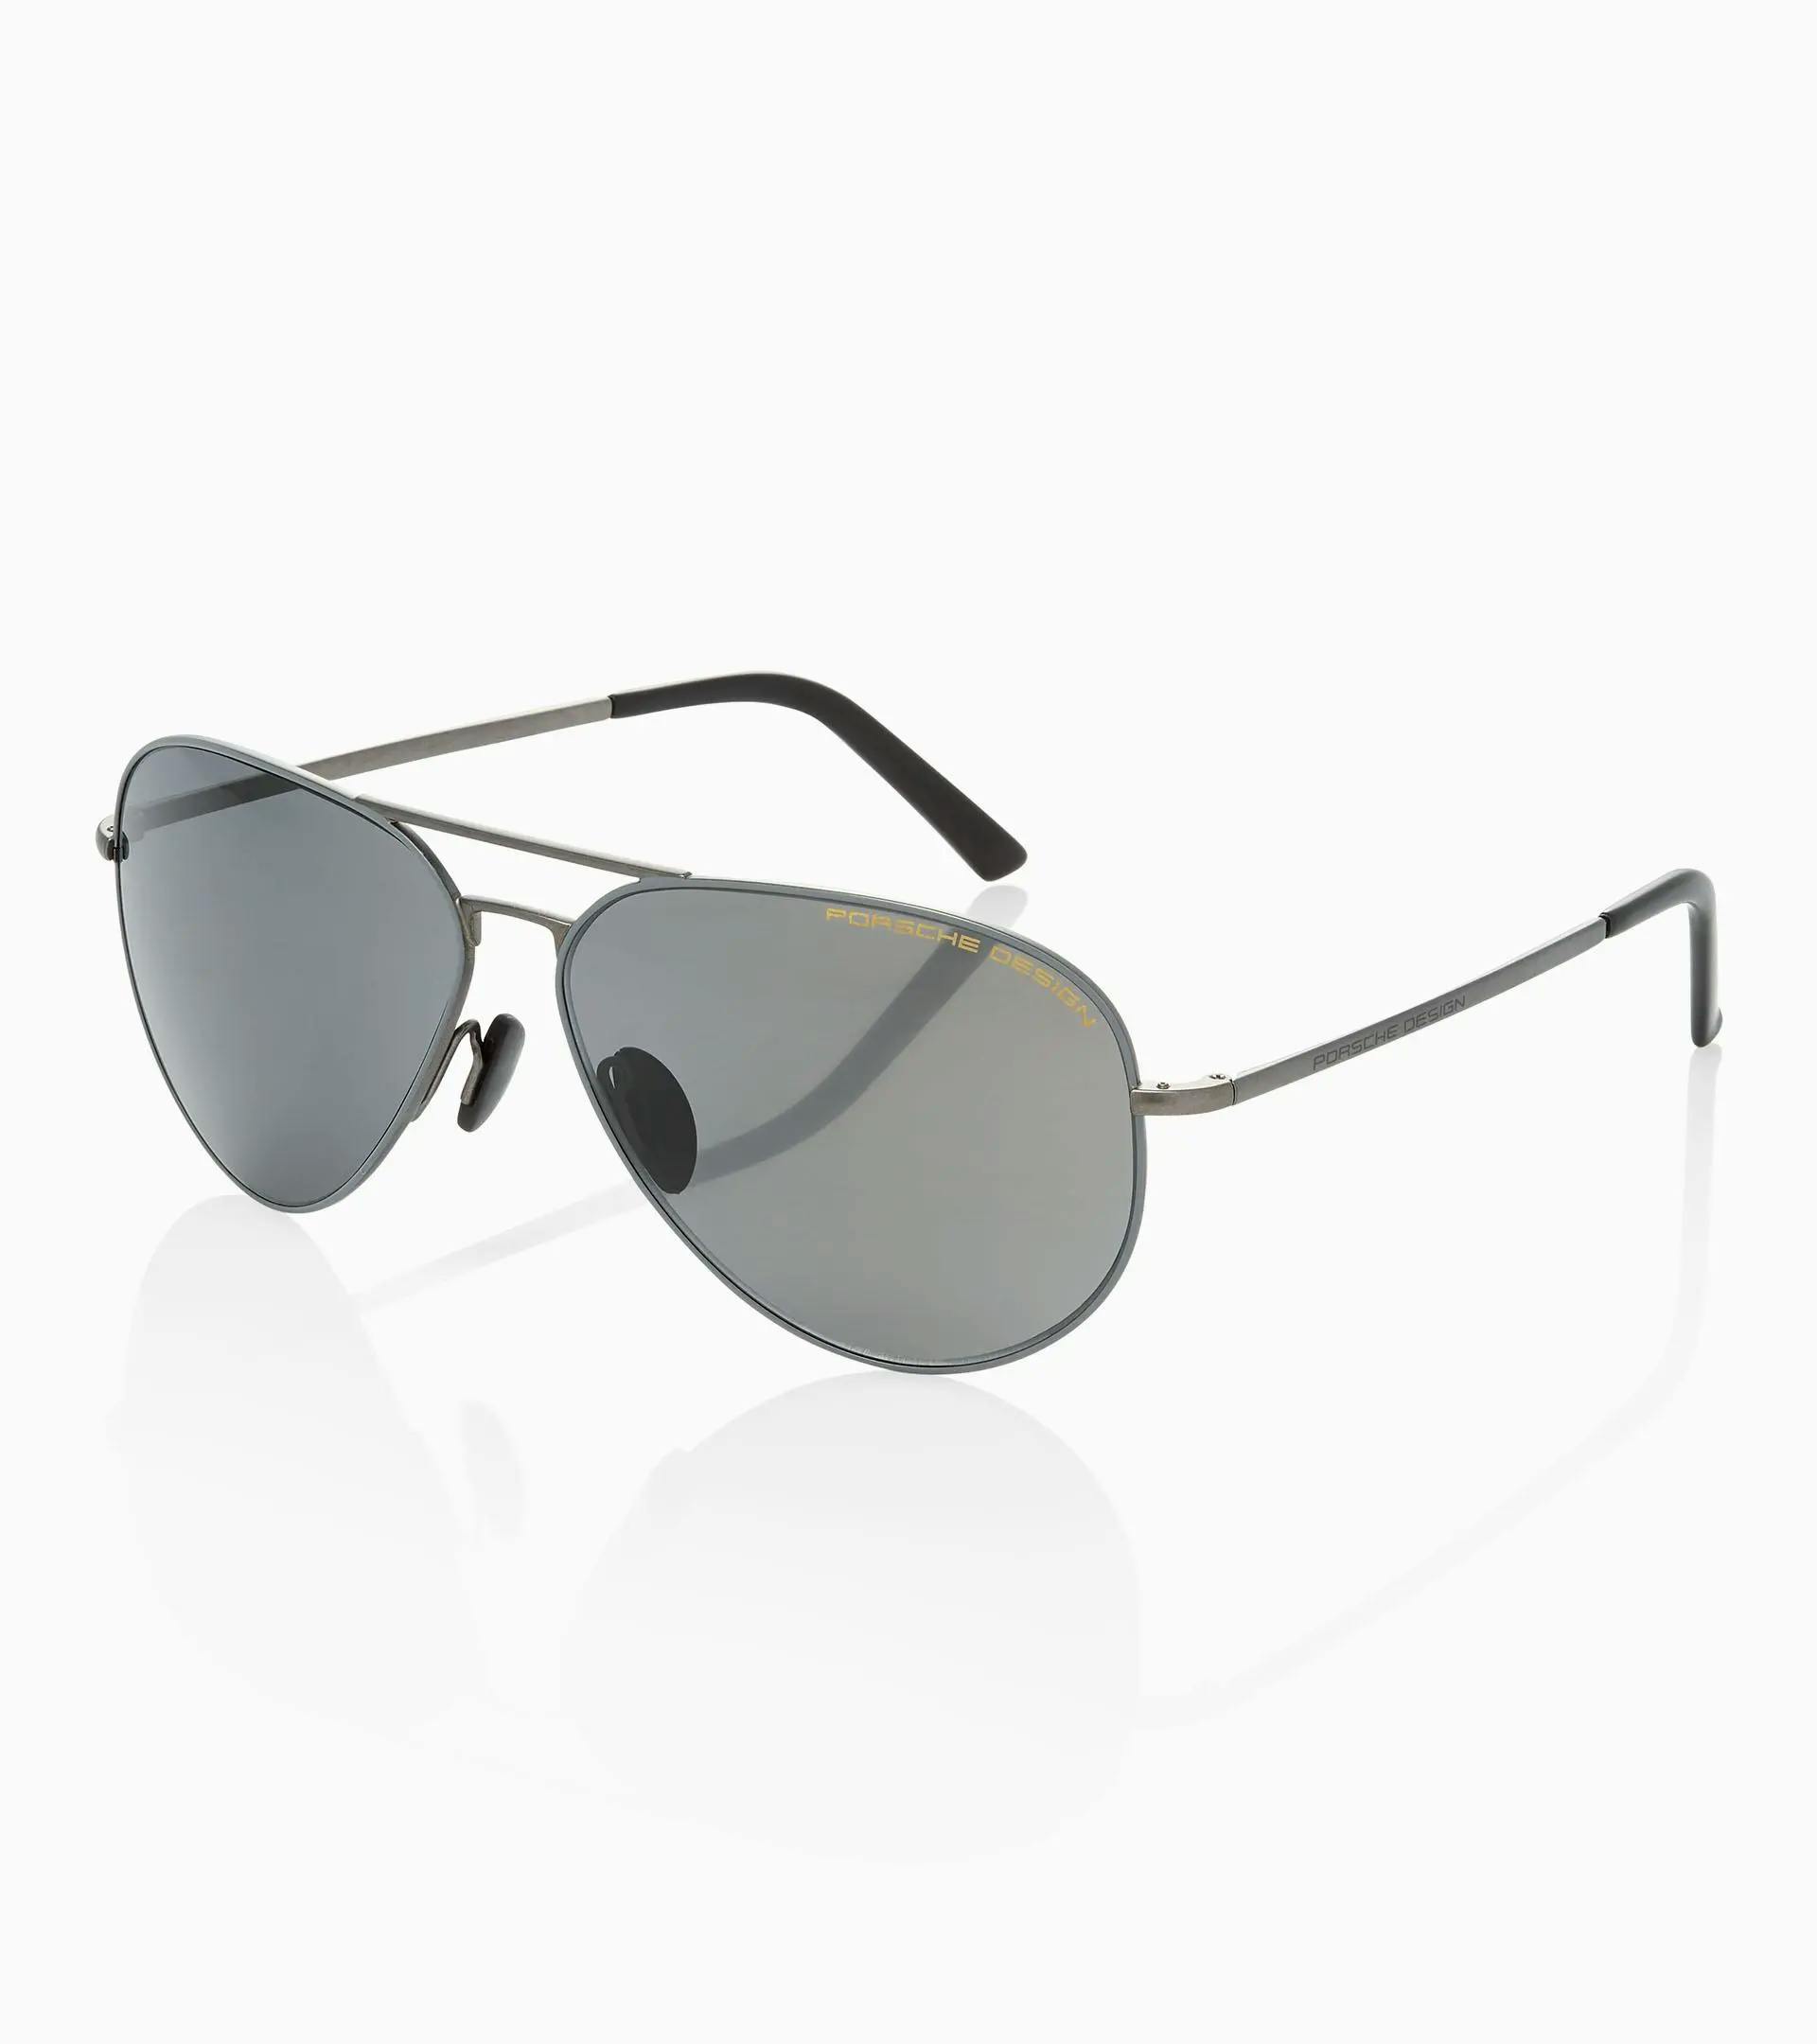 Pre-owned Sunglasses Authentic 5484 C 760/s8 Black Gray Square Polarized